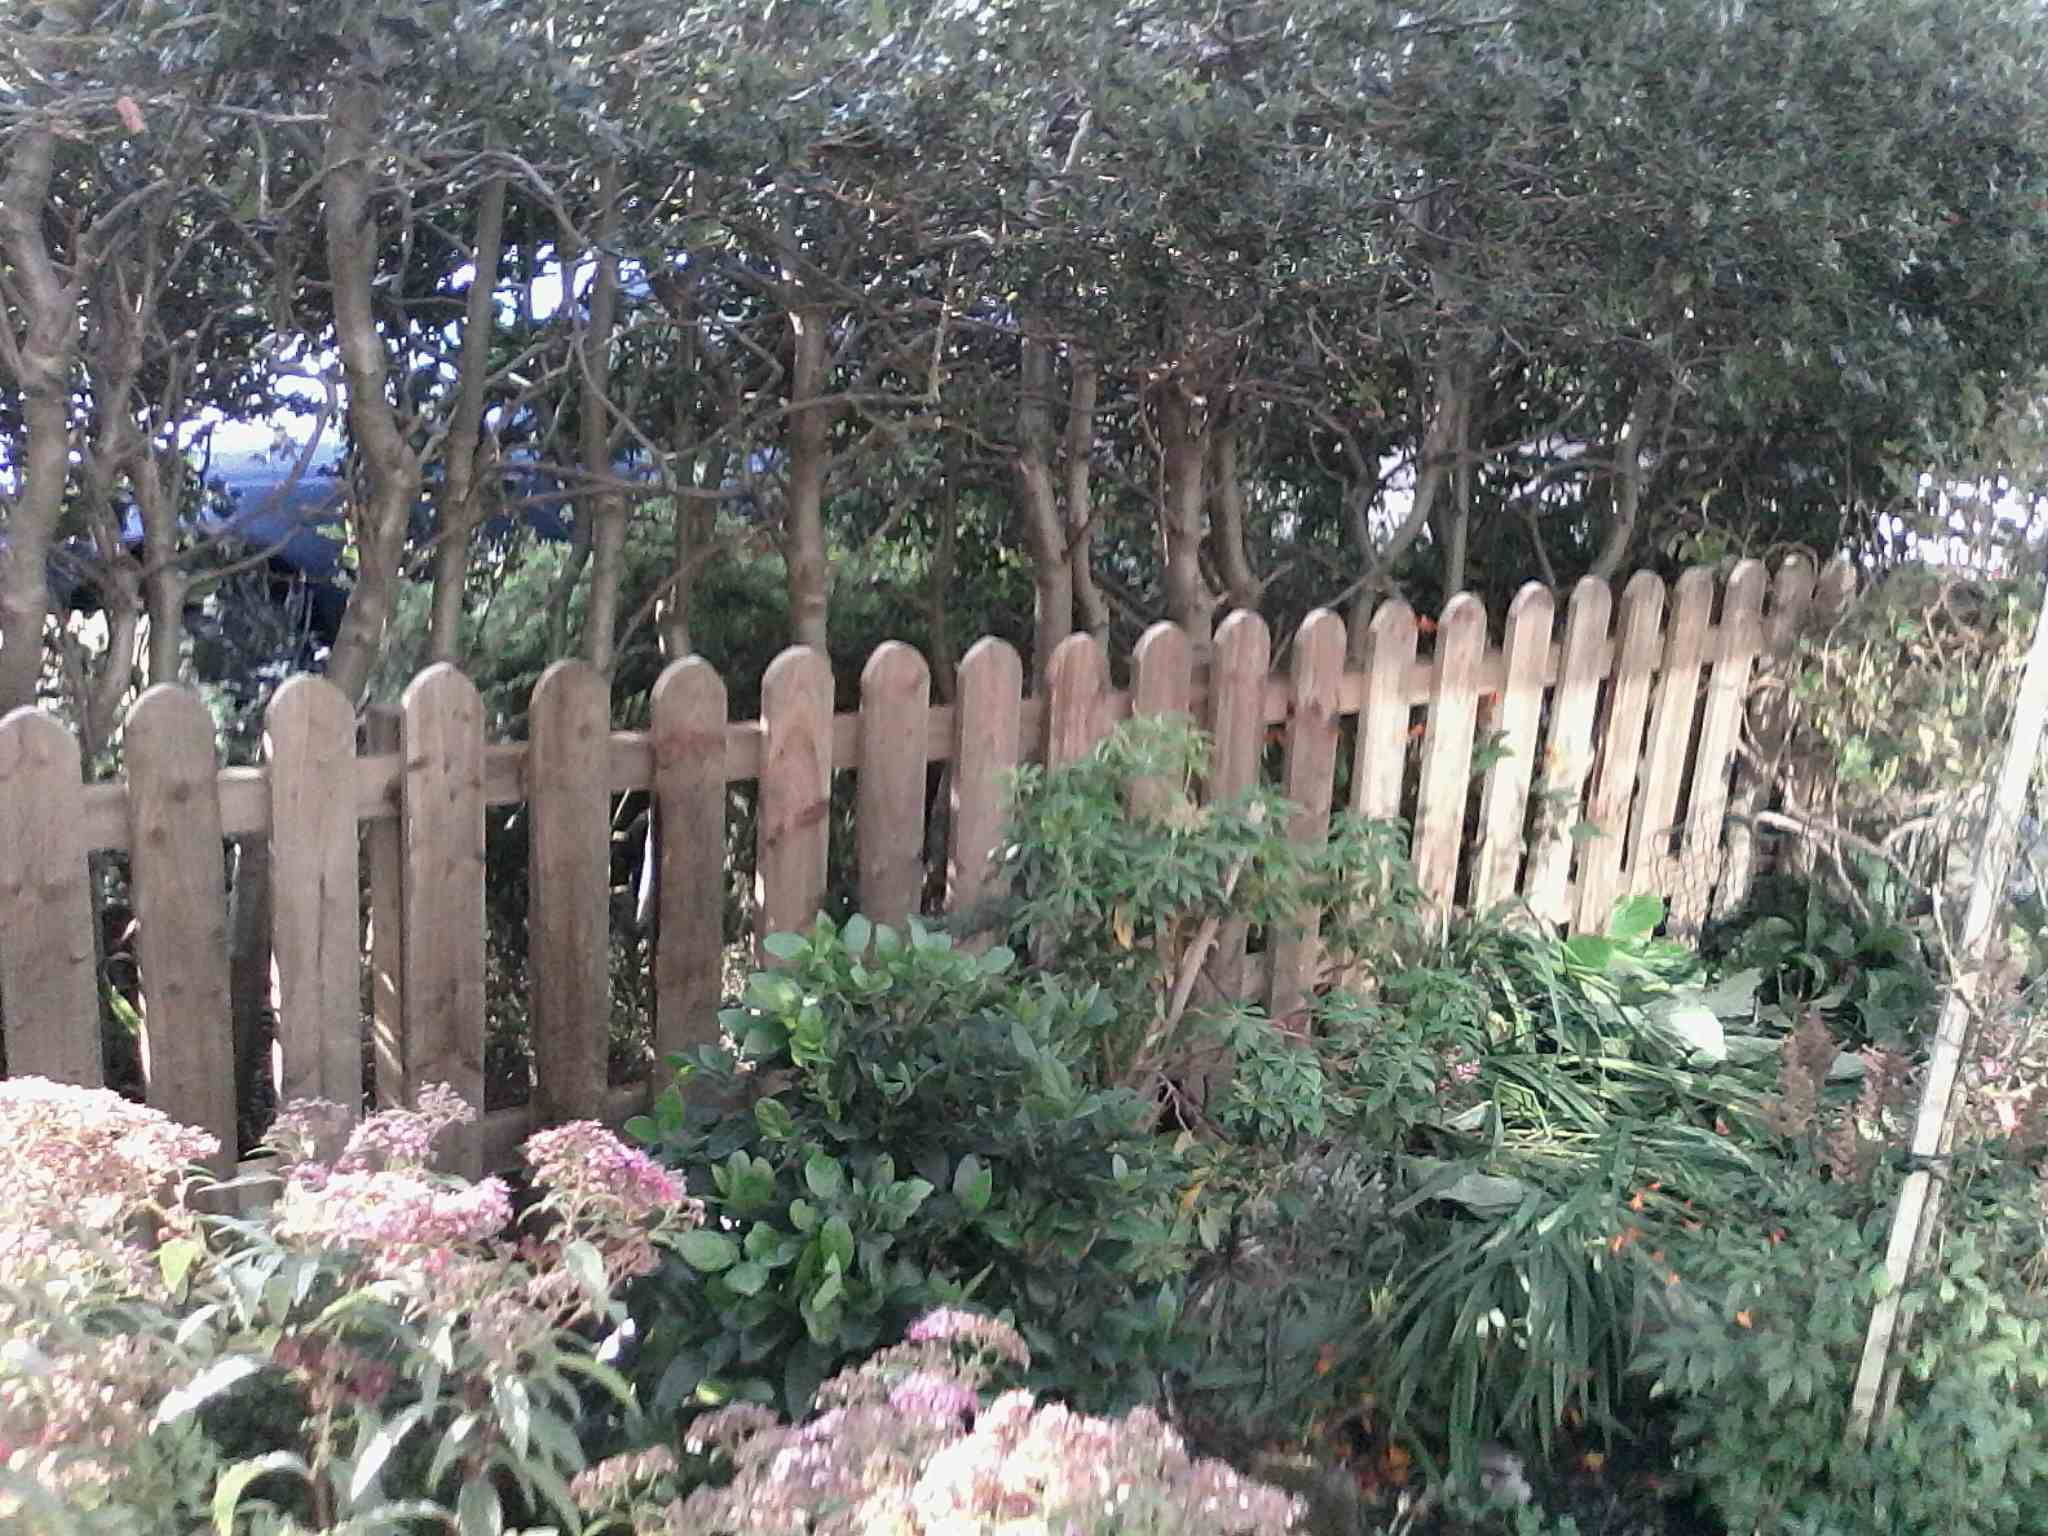 Garden Fencing 36 inch high